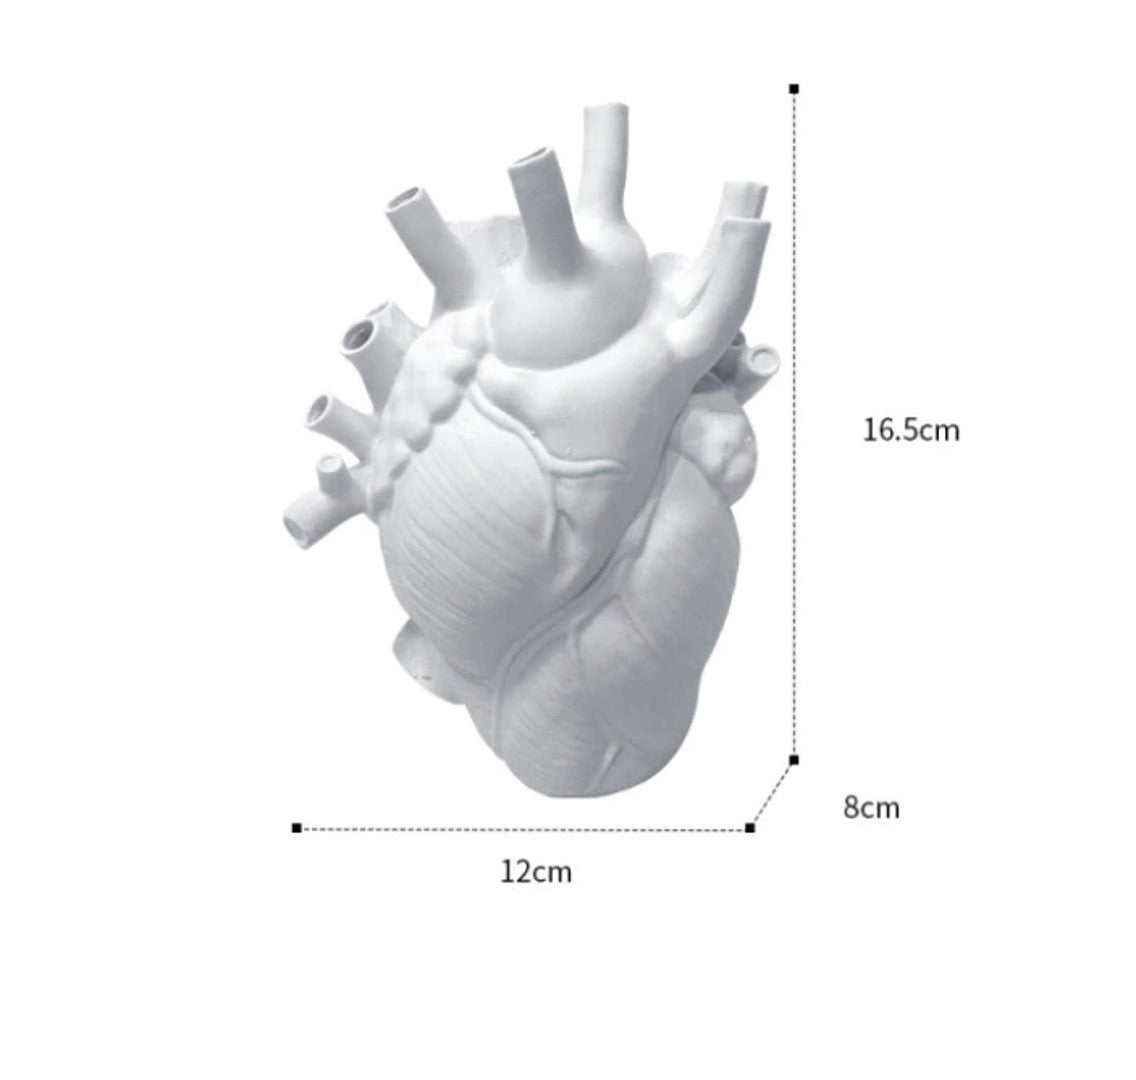 Anatomical heart vase in white.